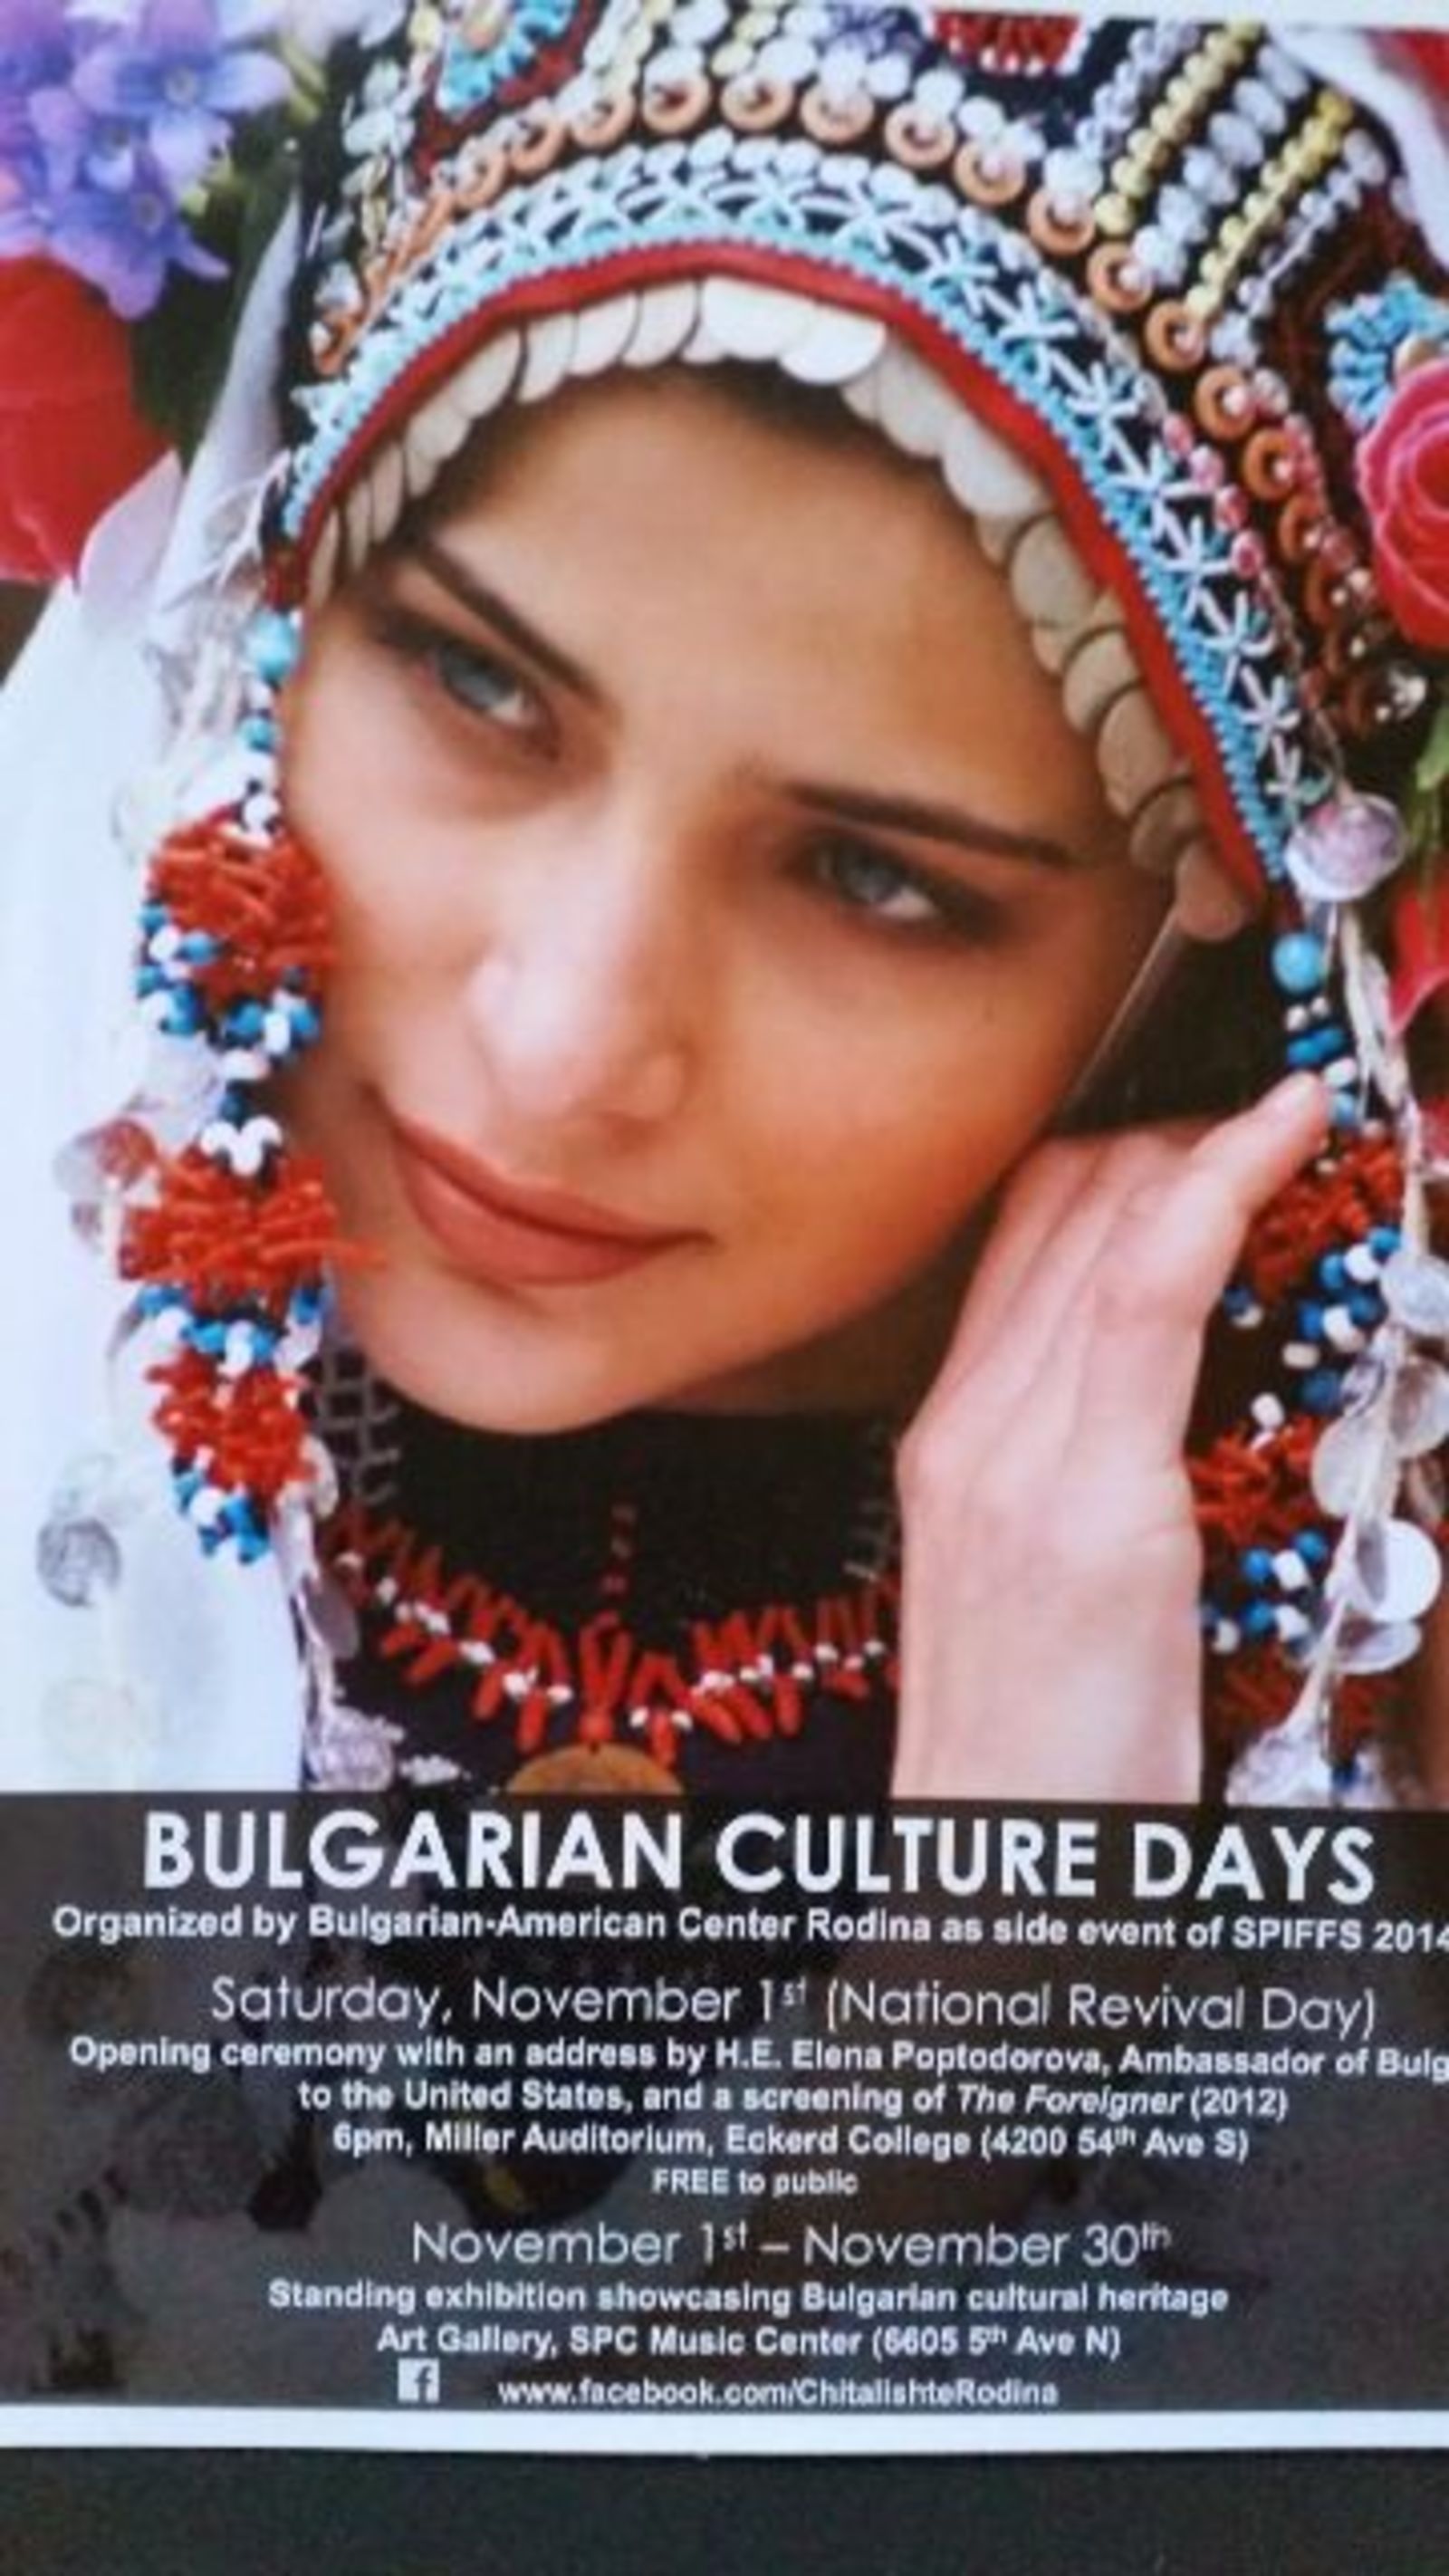 Bulgarian Culture Days in St. Petersburg, Florida